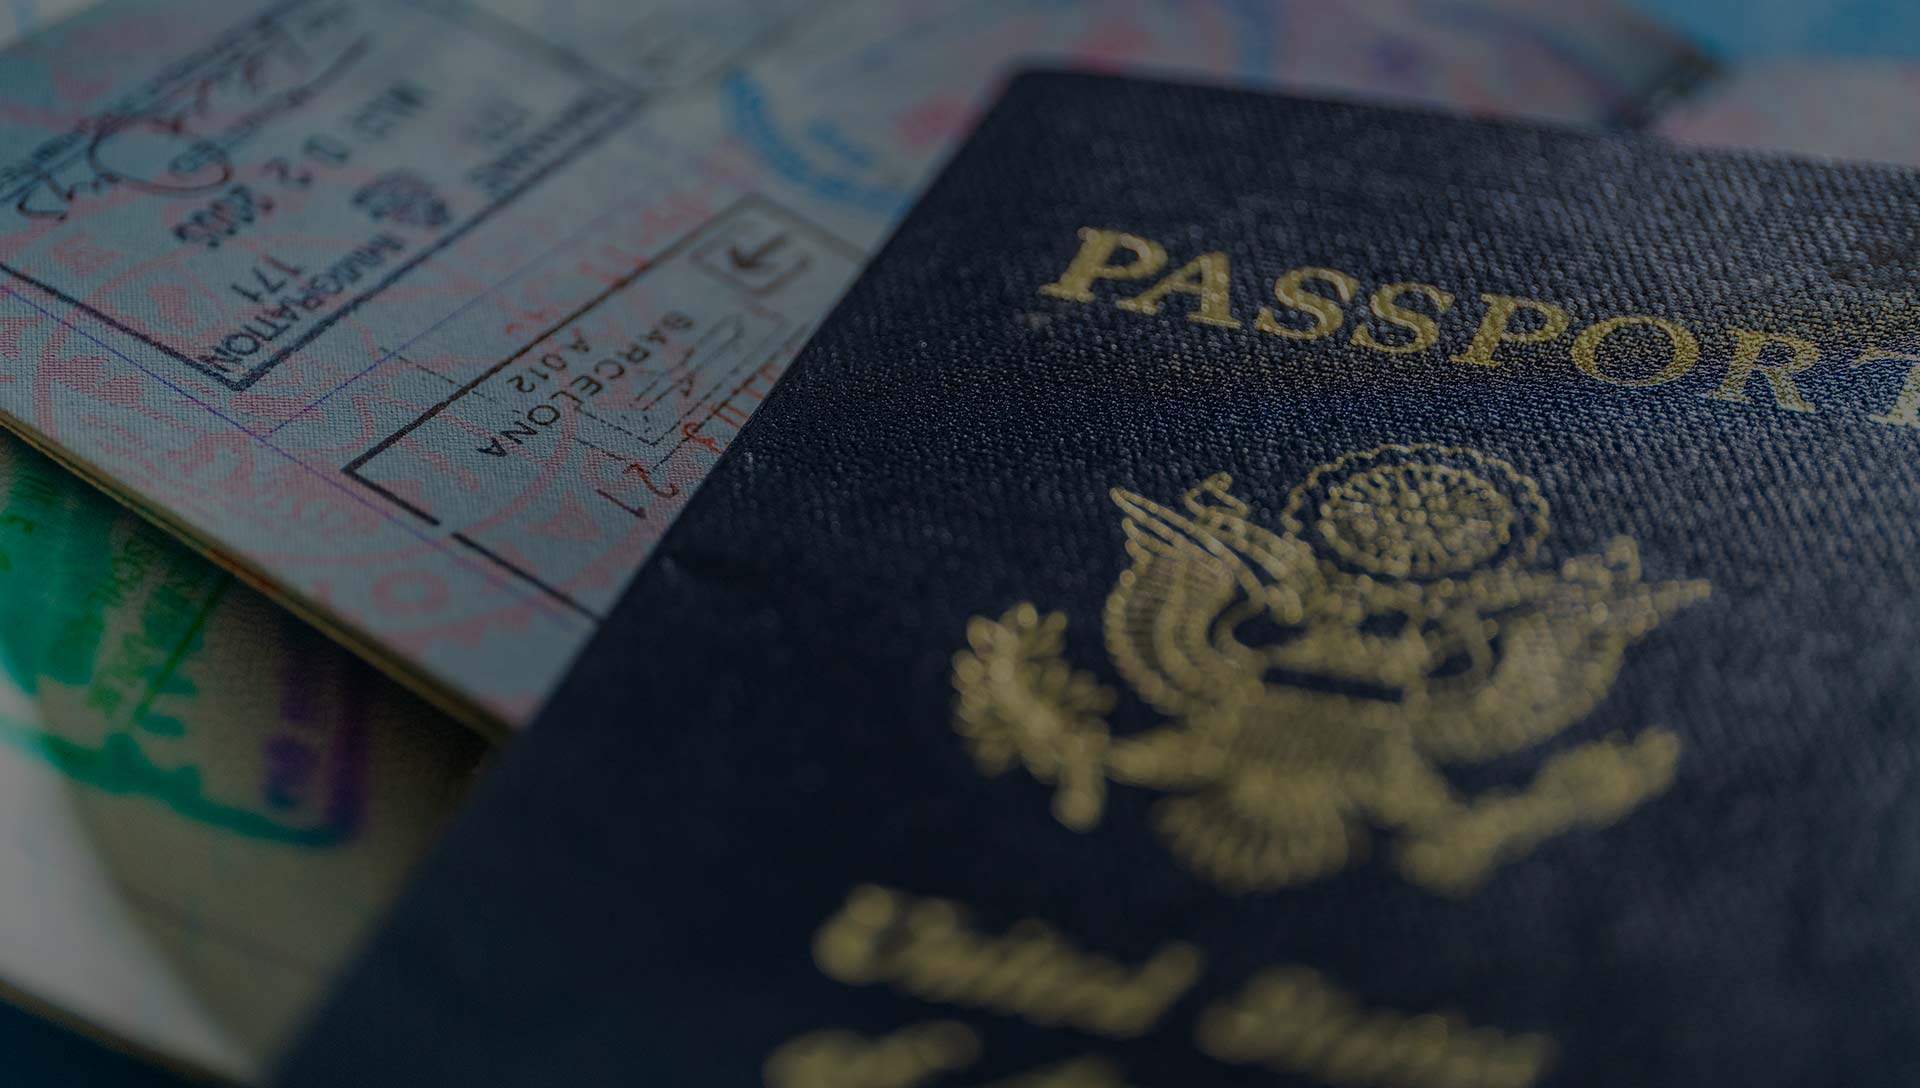 A US passport and passport stamps.